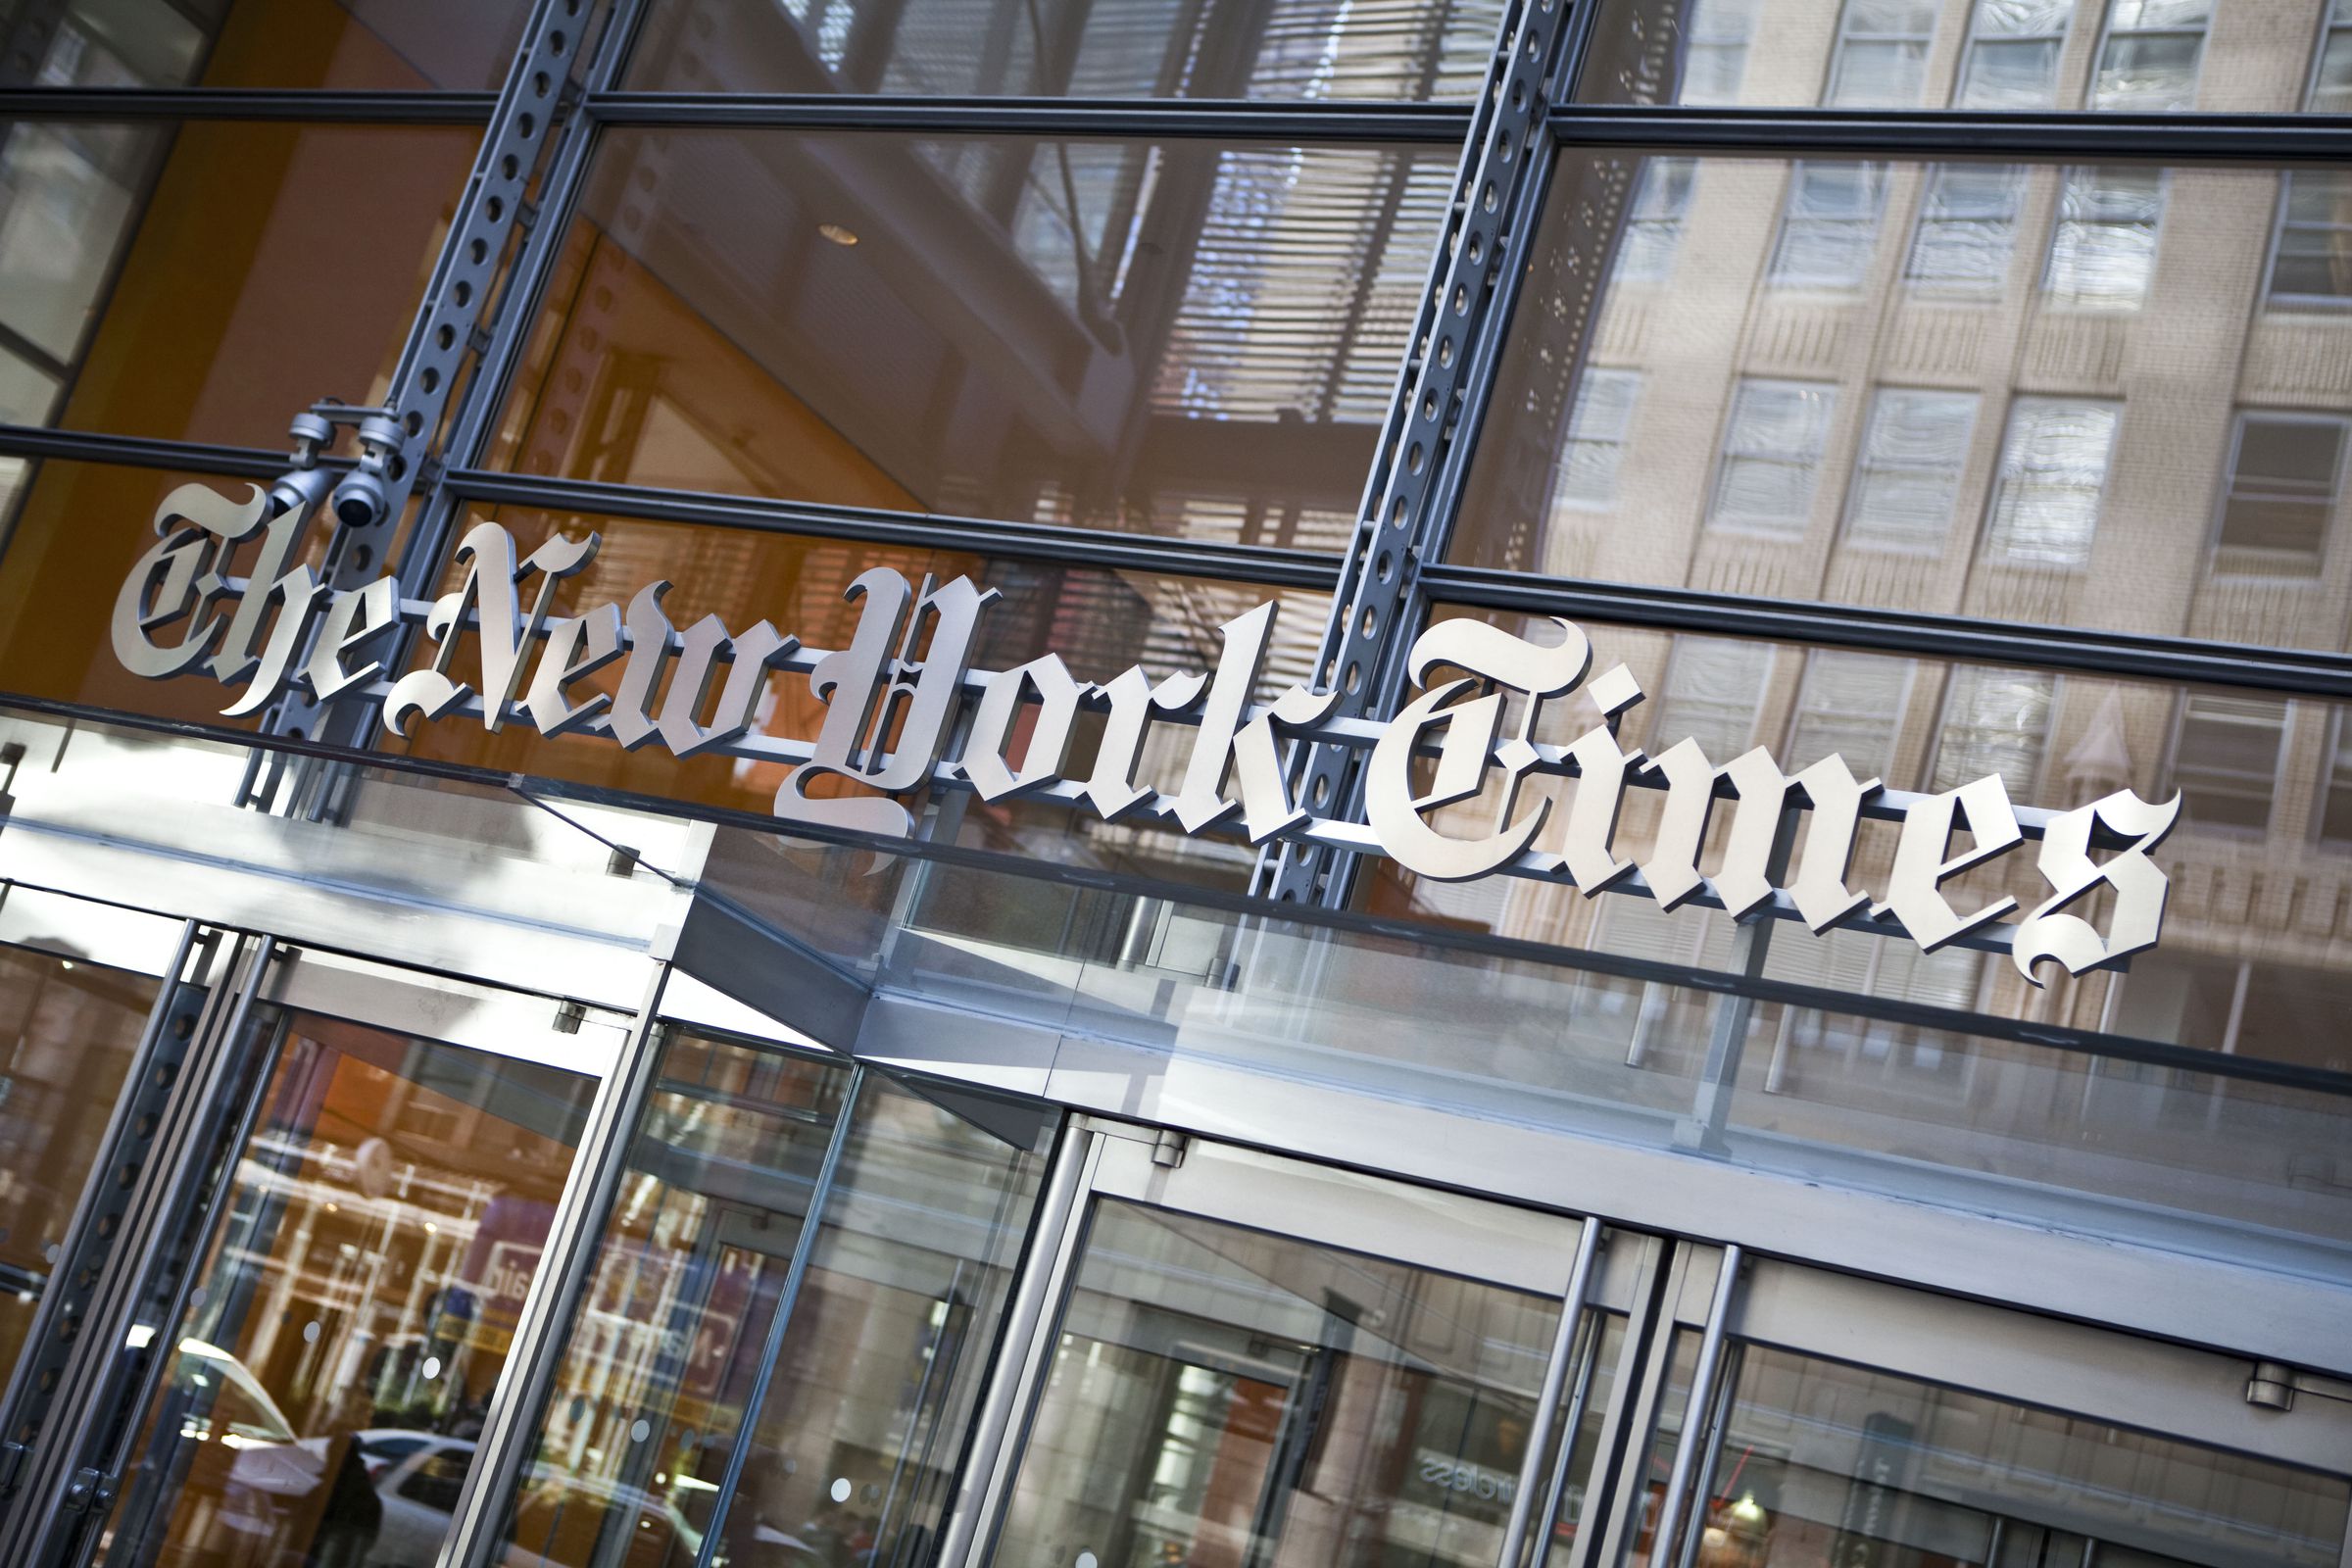 New York Times' Quarterly Profits Falls 58 Percent